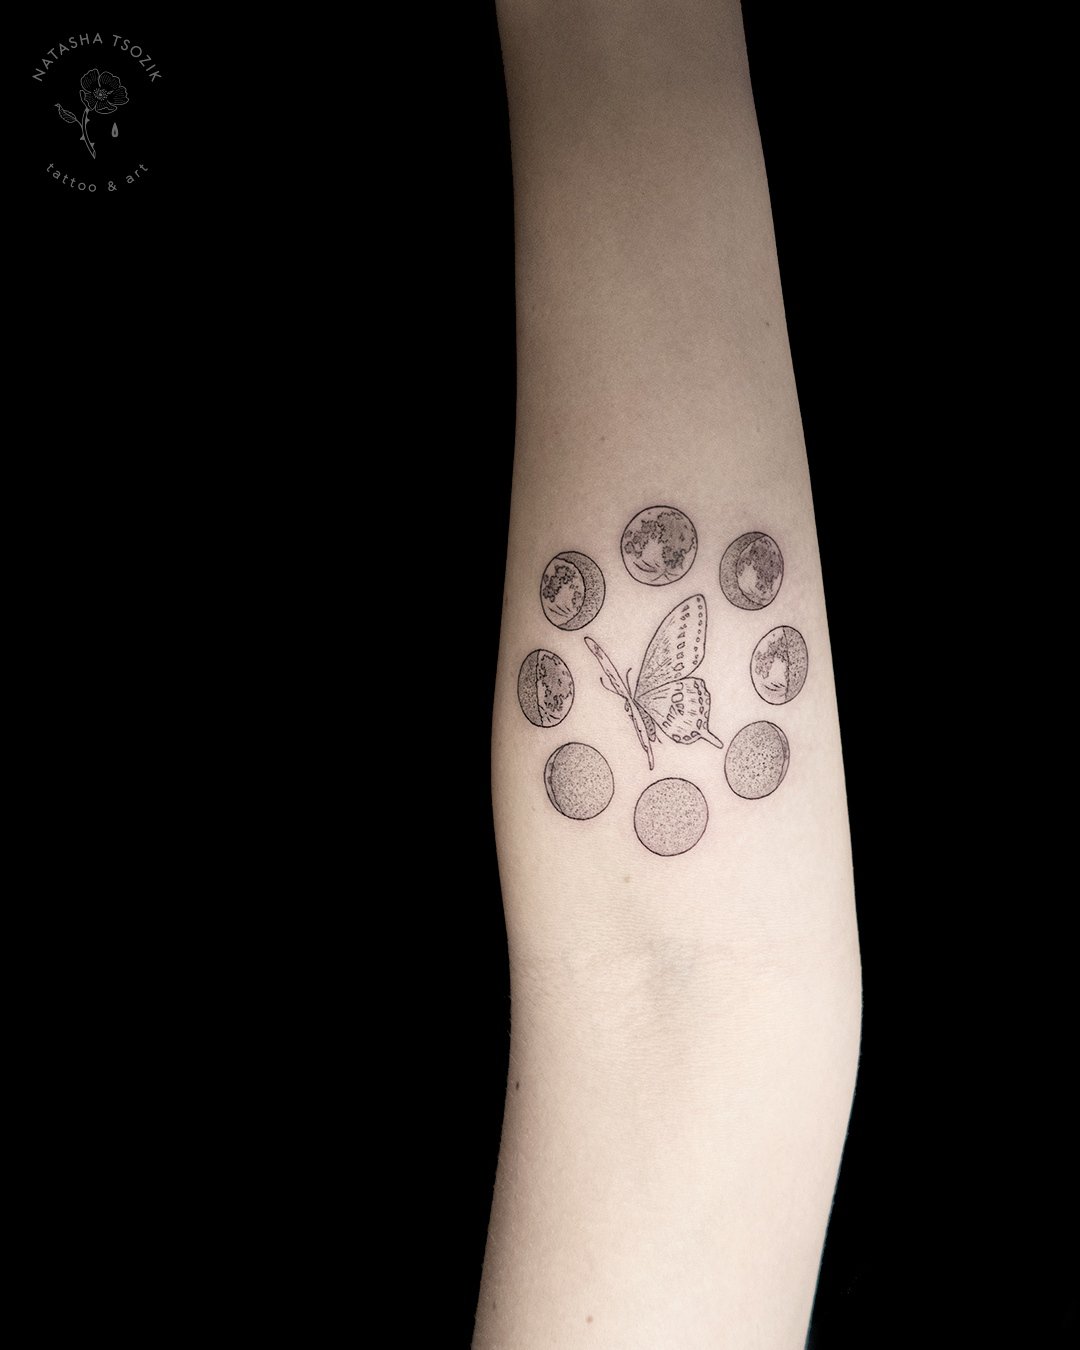 moon phases and butterfly fine line tattoo on forearm by Natasha Tsozik